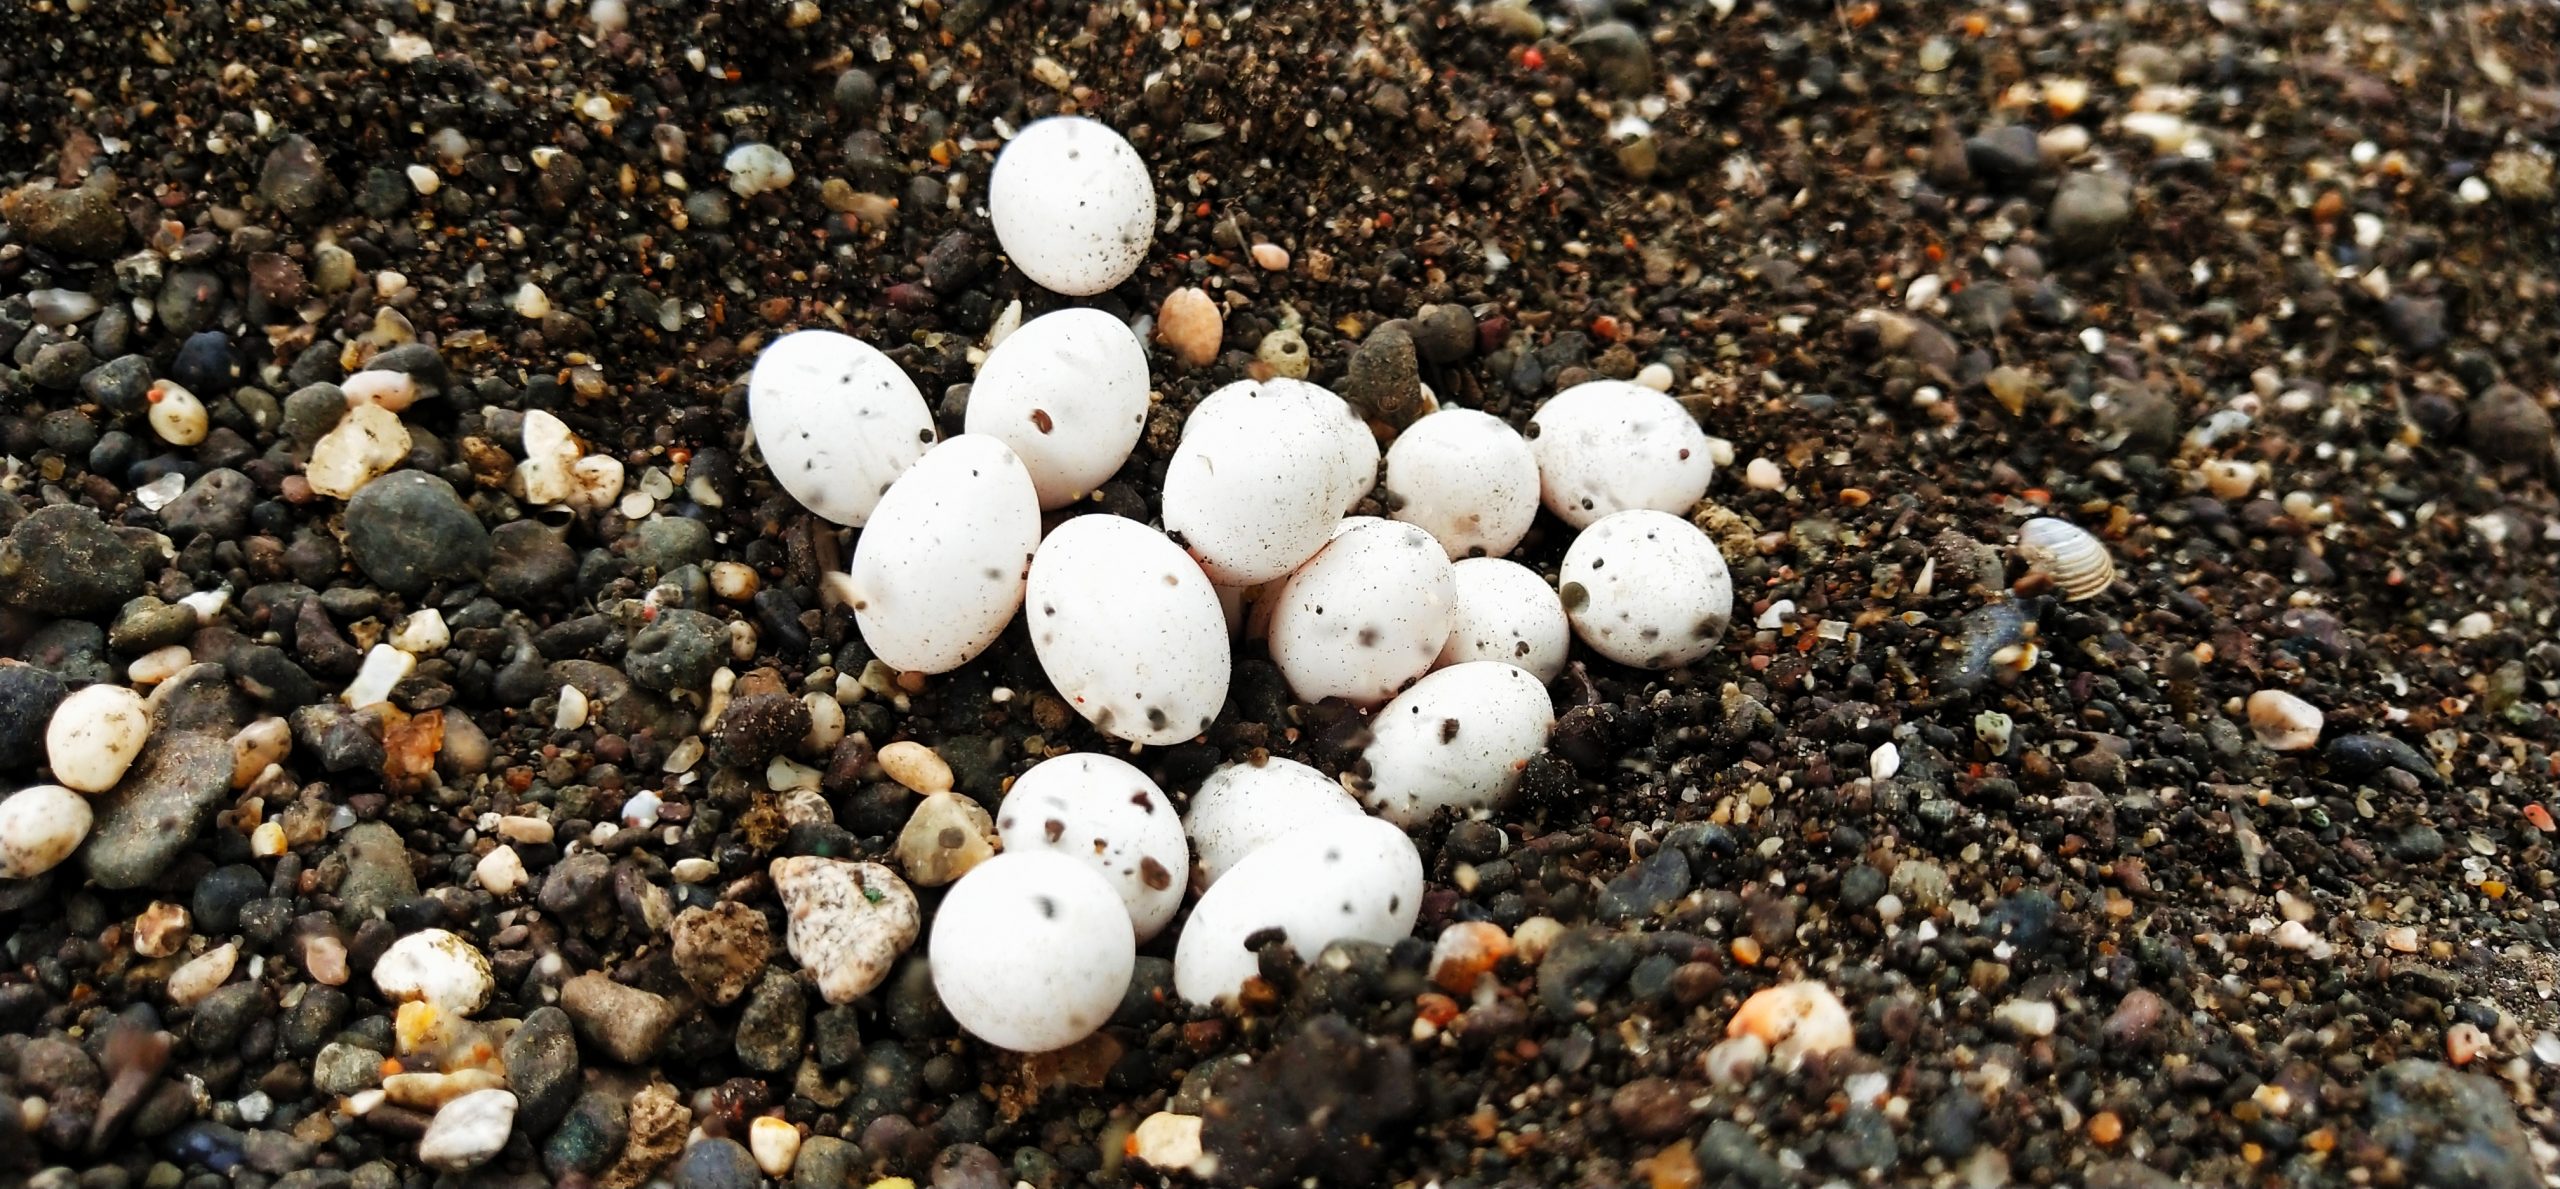 Common wall lizard eggs